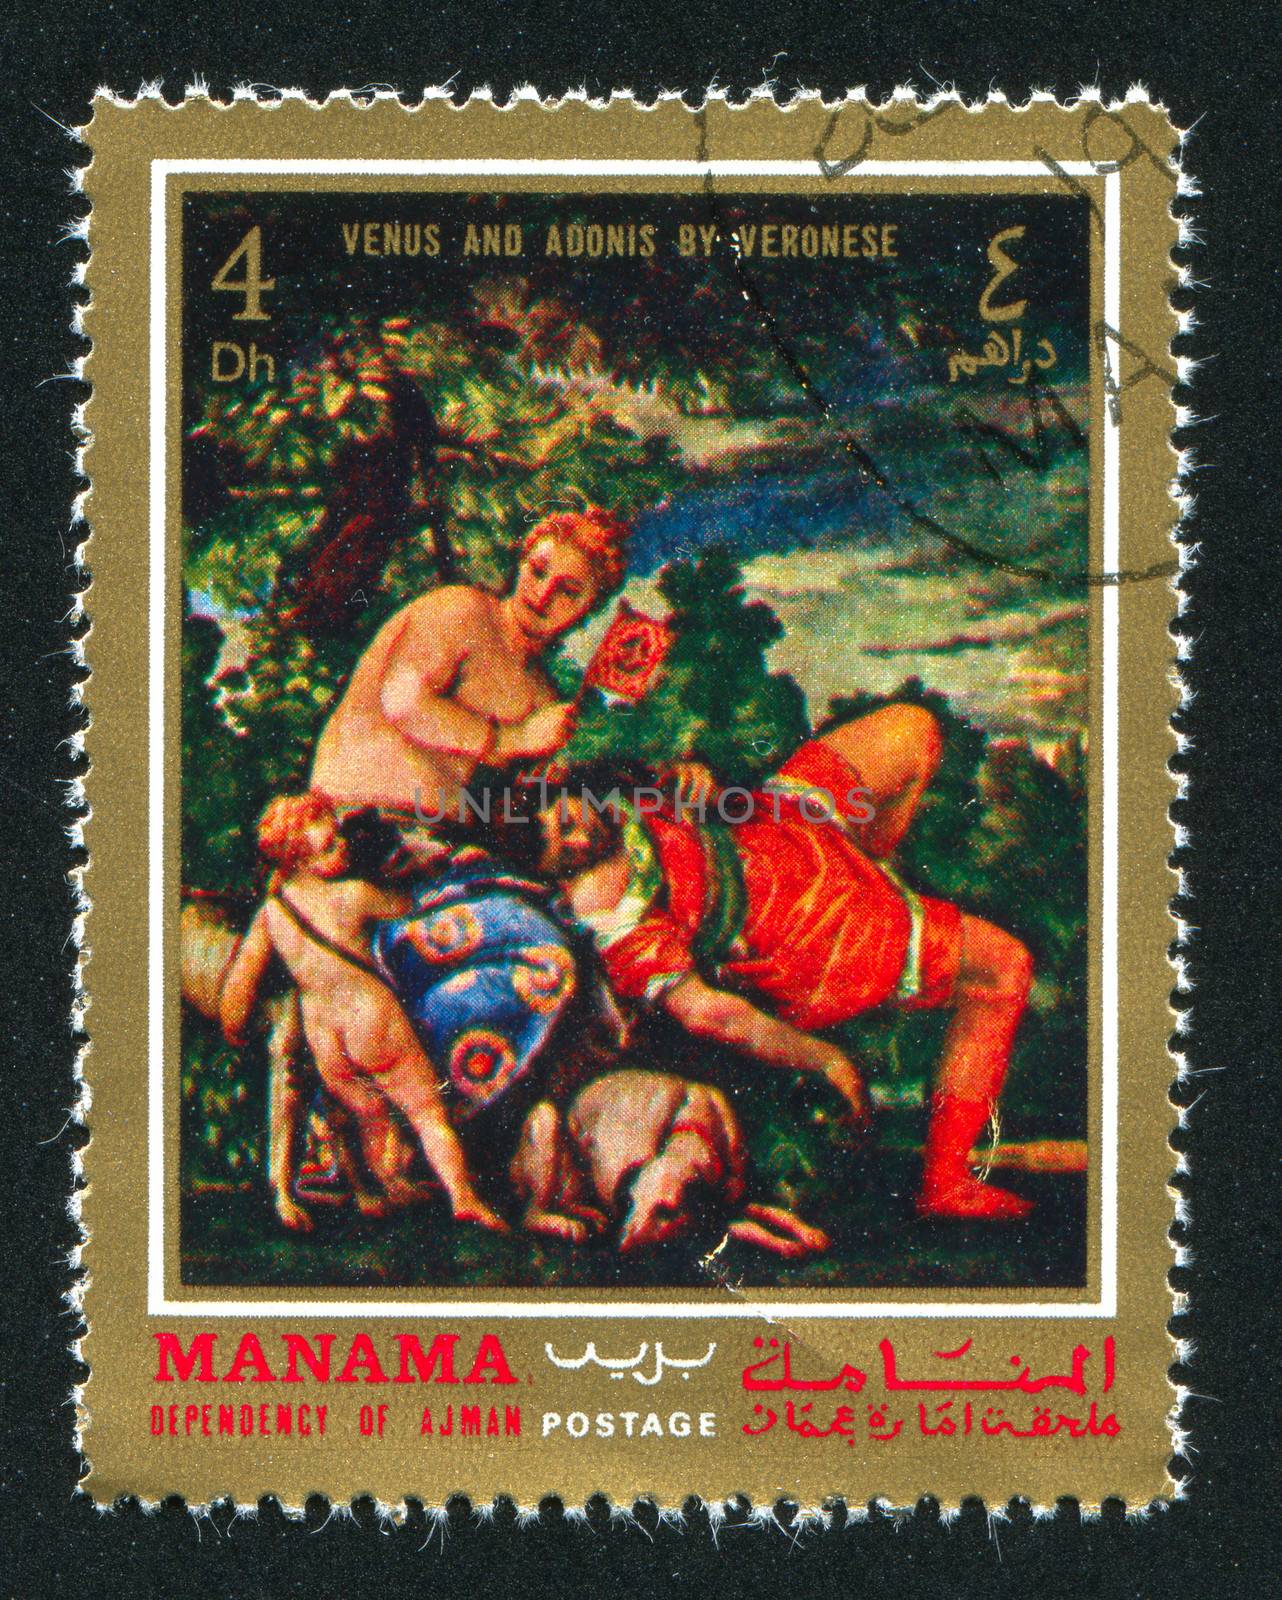 MANAMA - CIRCA 1971: stamp printed by Manama, shows Venus and Adonis by Veronese, circa 1971